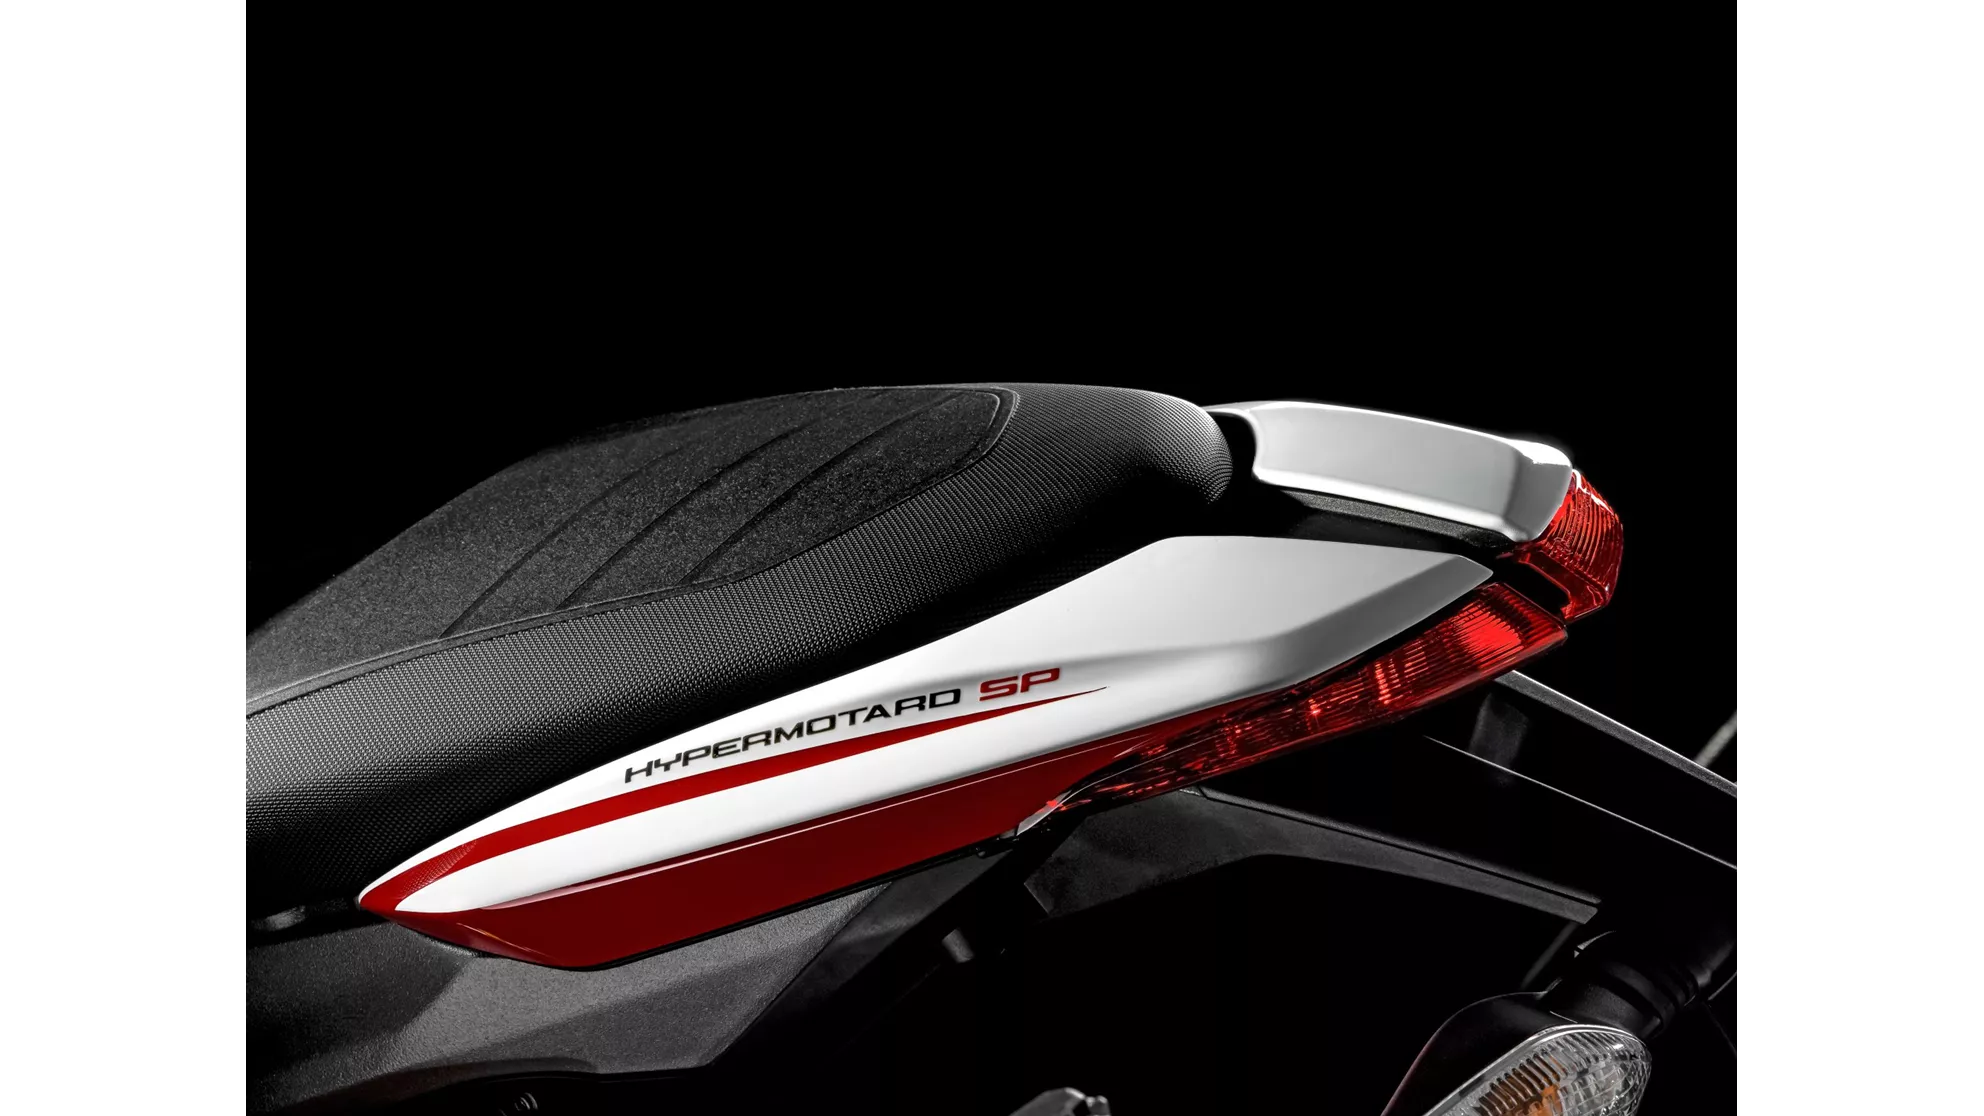 Ducati Hypermotard SP 821 - Image 1